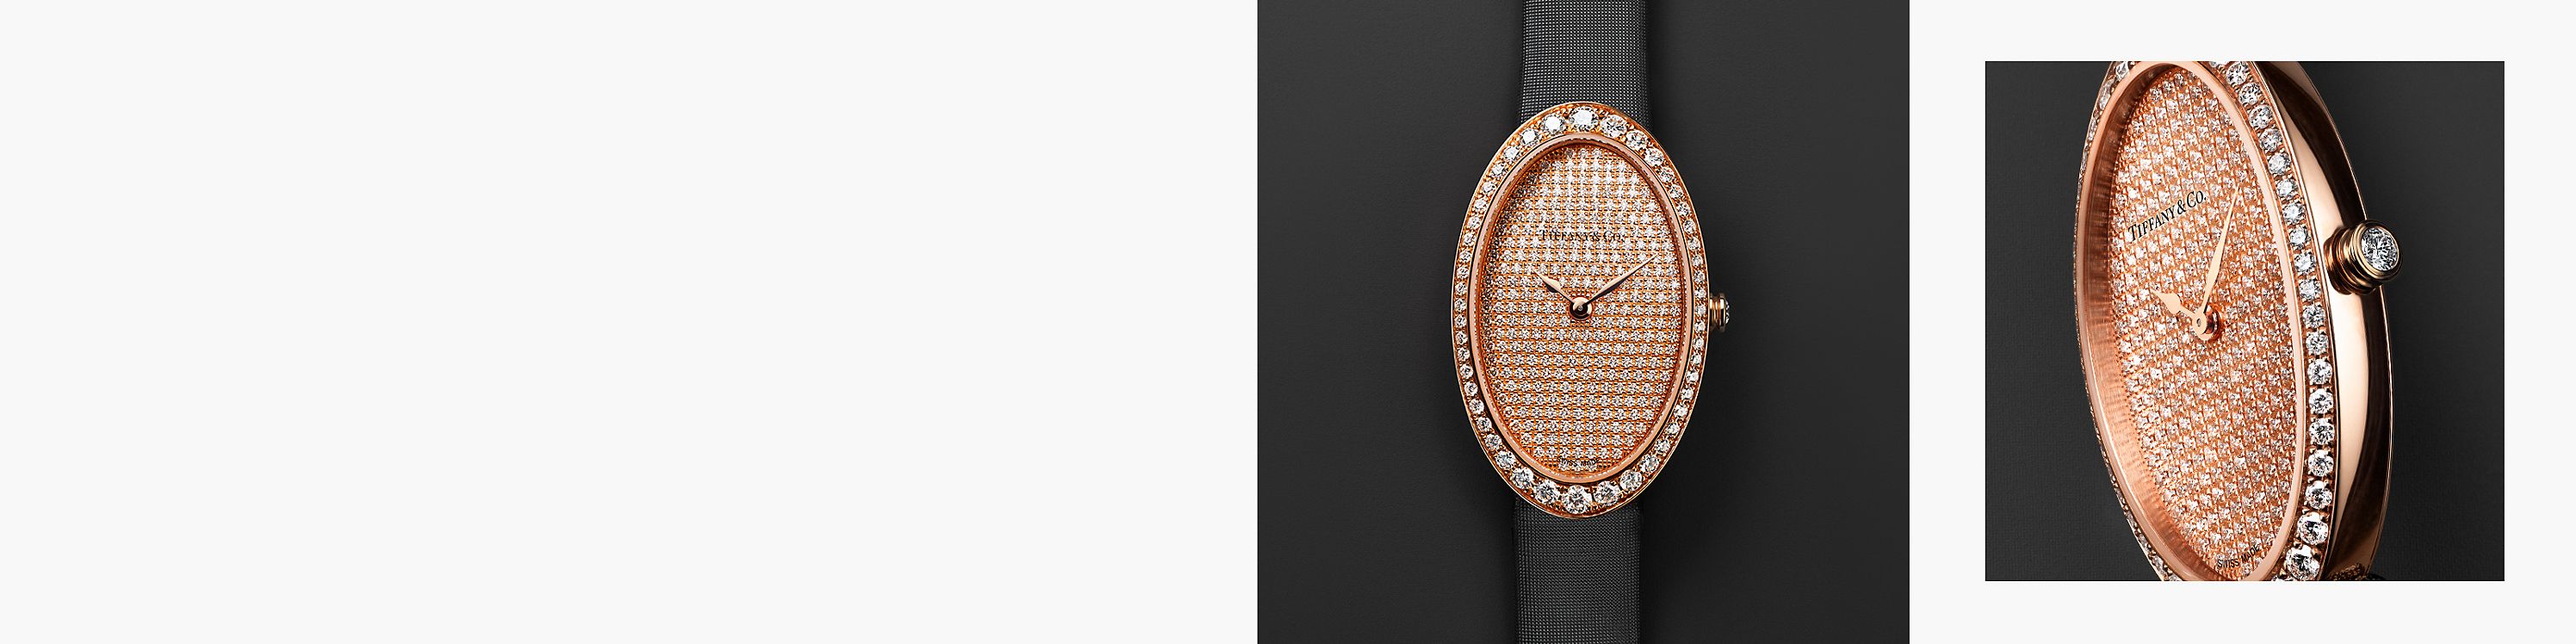 Tiffany Diamond Watches